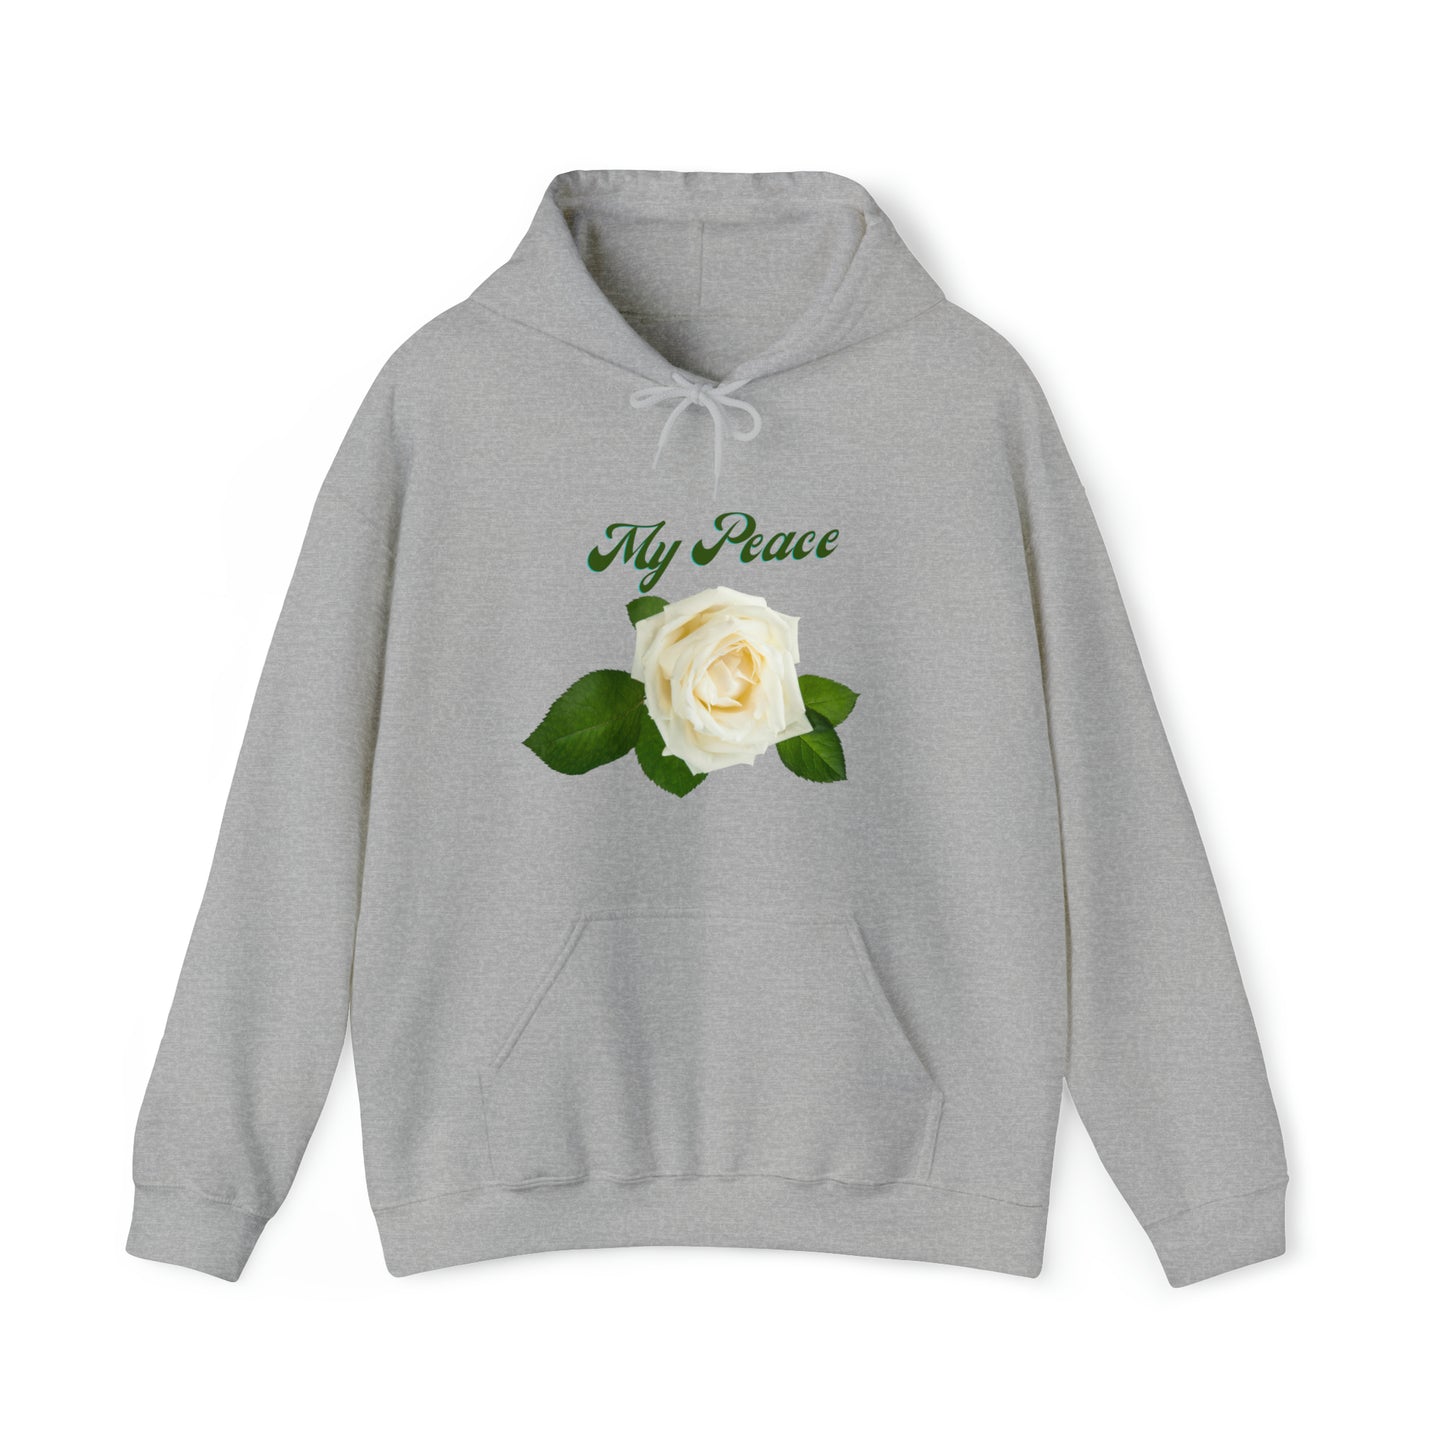 White Rose flower statement hooded sweatshirt gift